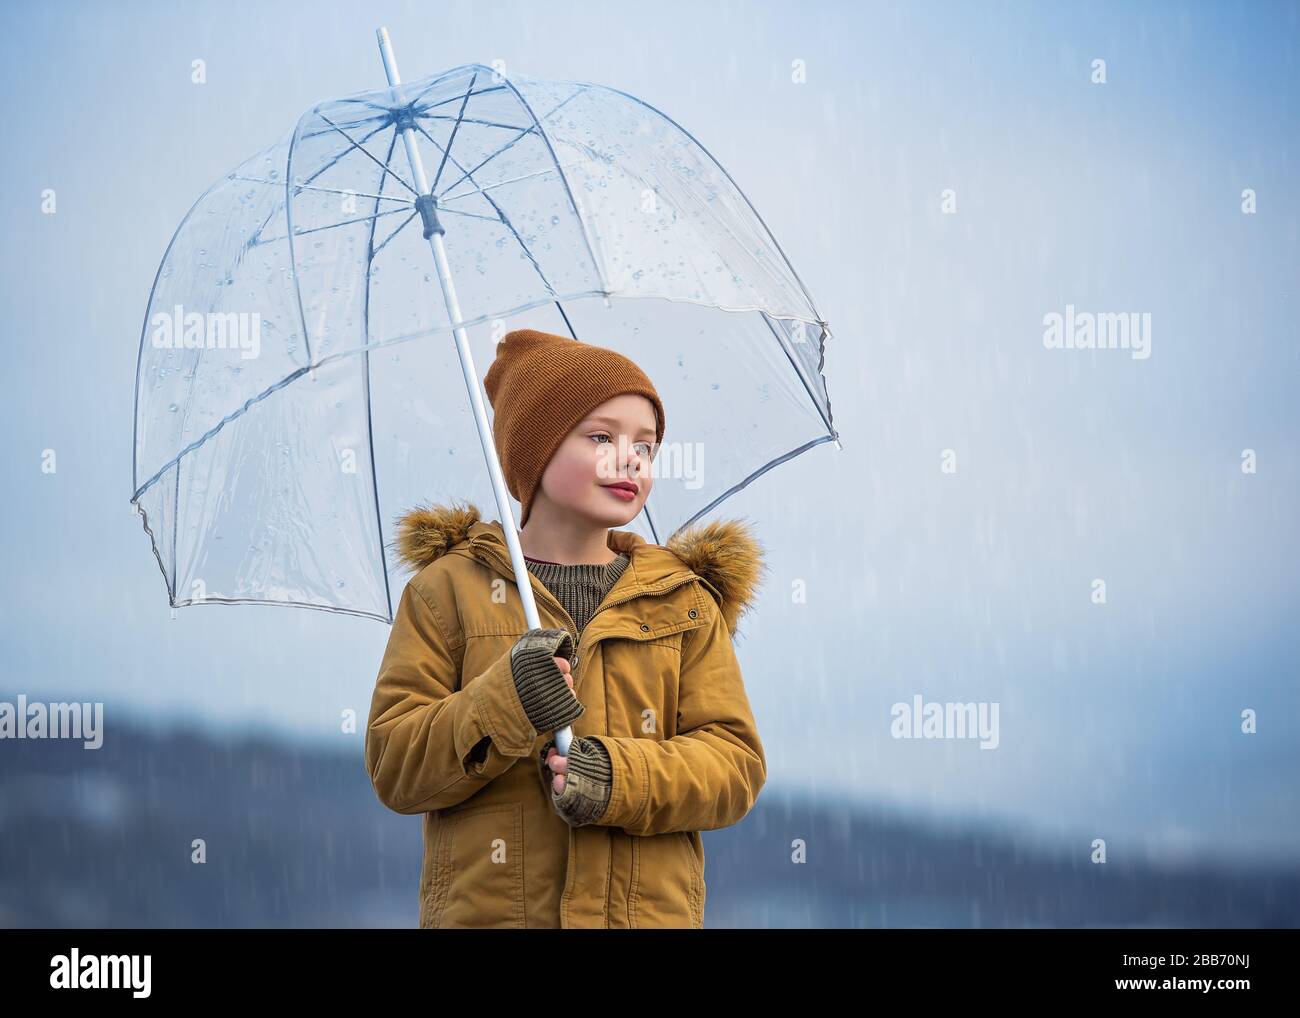 Smiling Boy standing under an umbrella in the rain, Bedford, Halifax, Nova Scotia, Canada Stock Photo